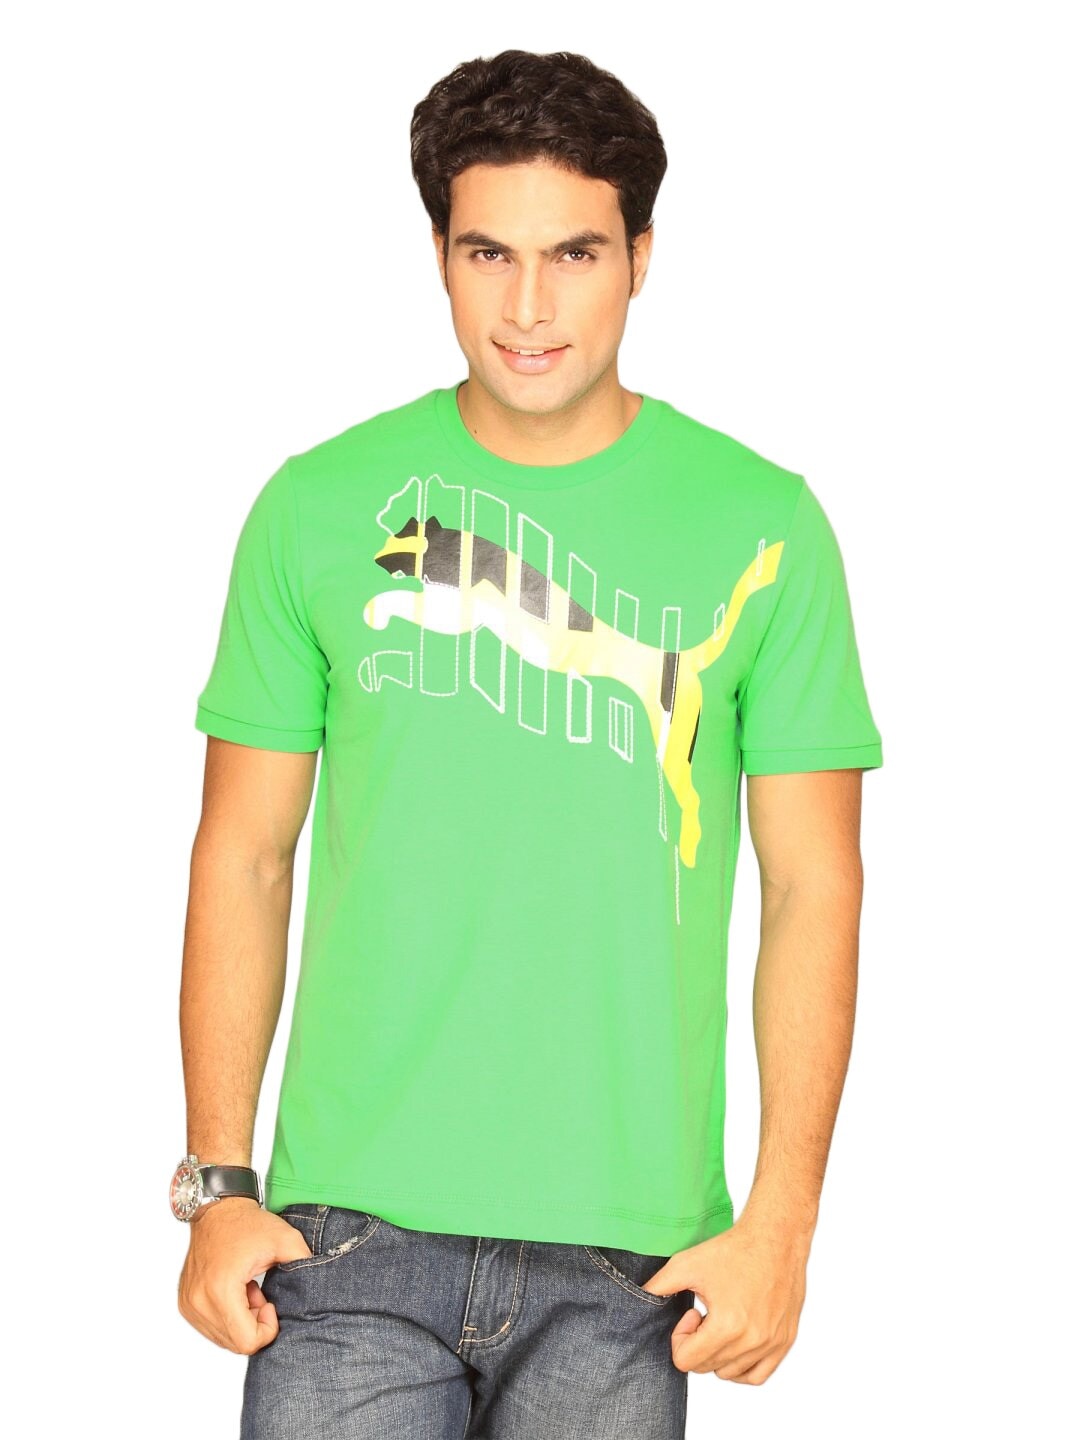 Puma Men's Graphics Story Green T-shirt